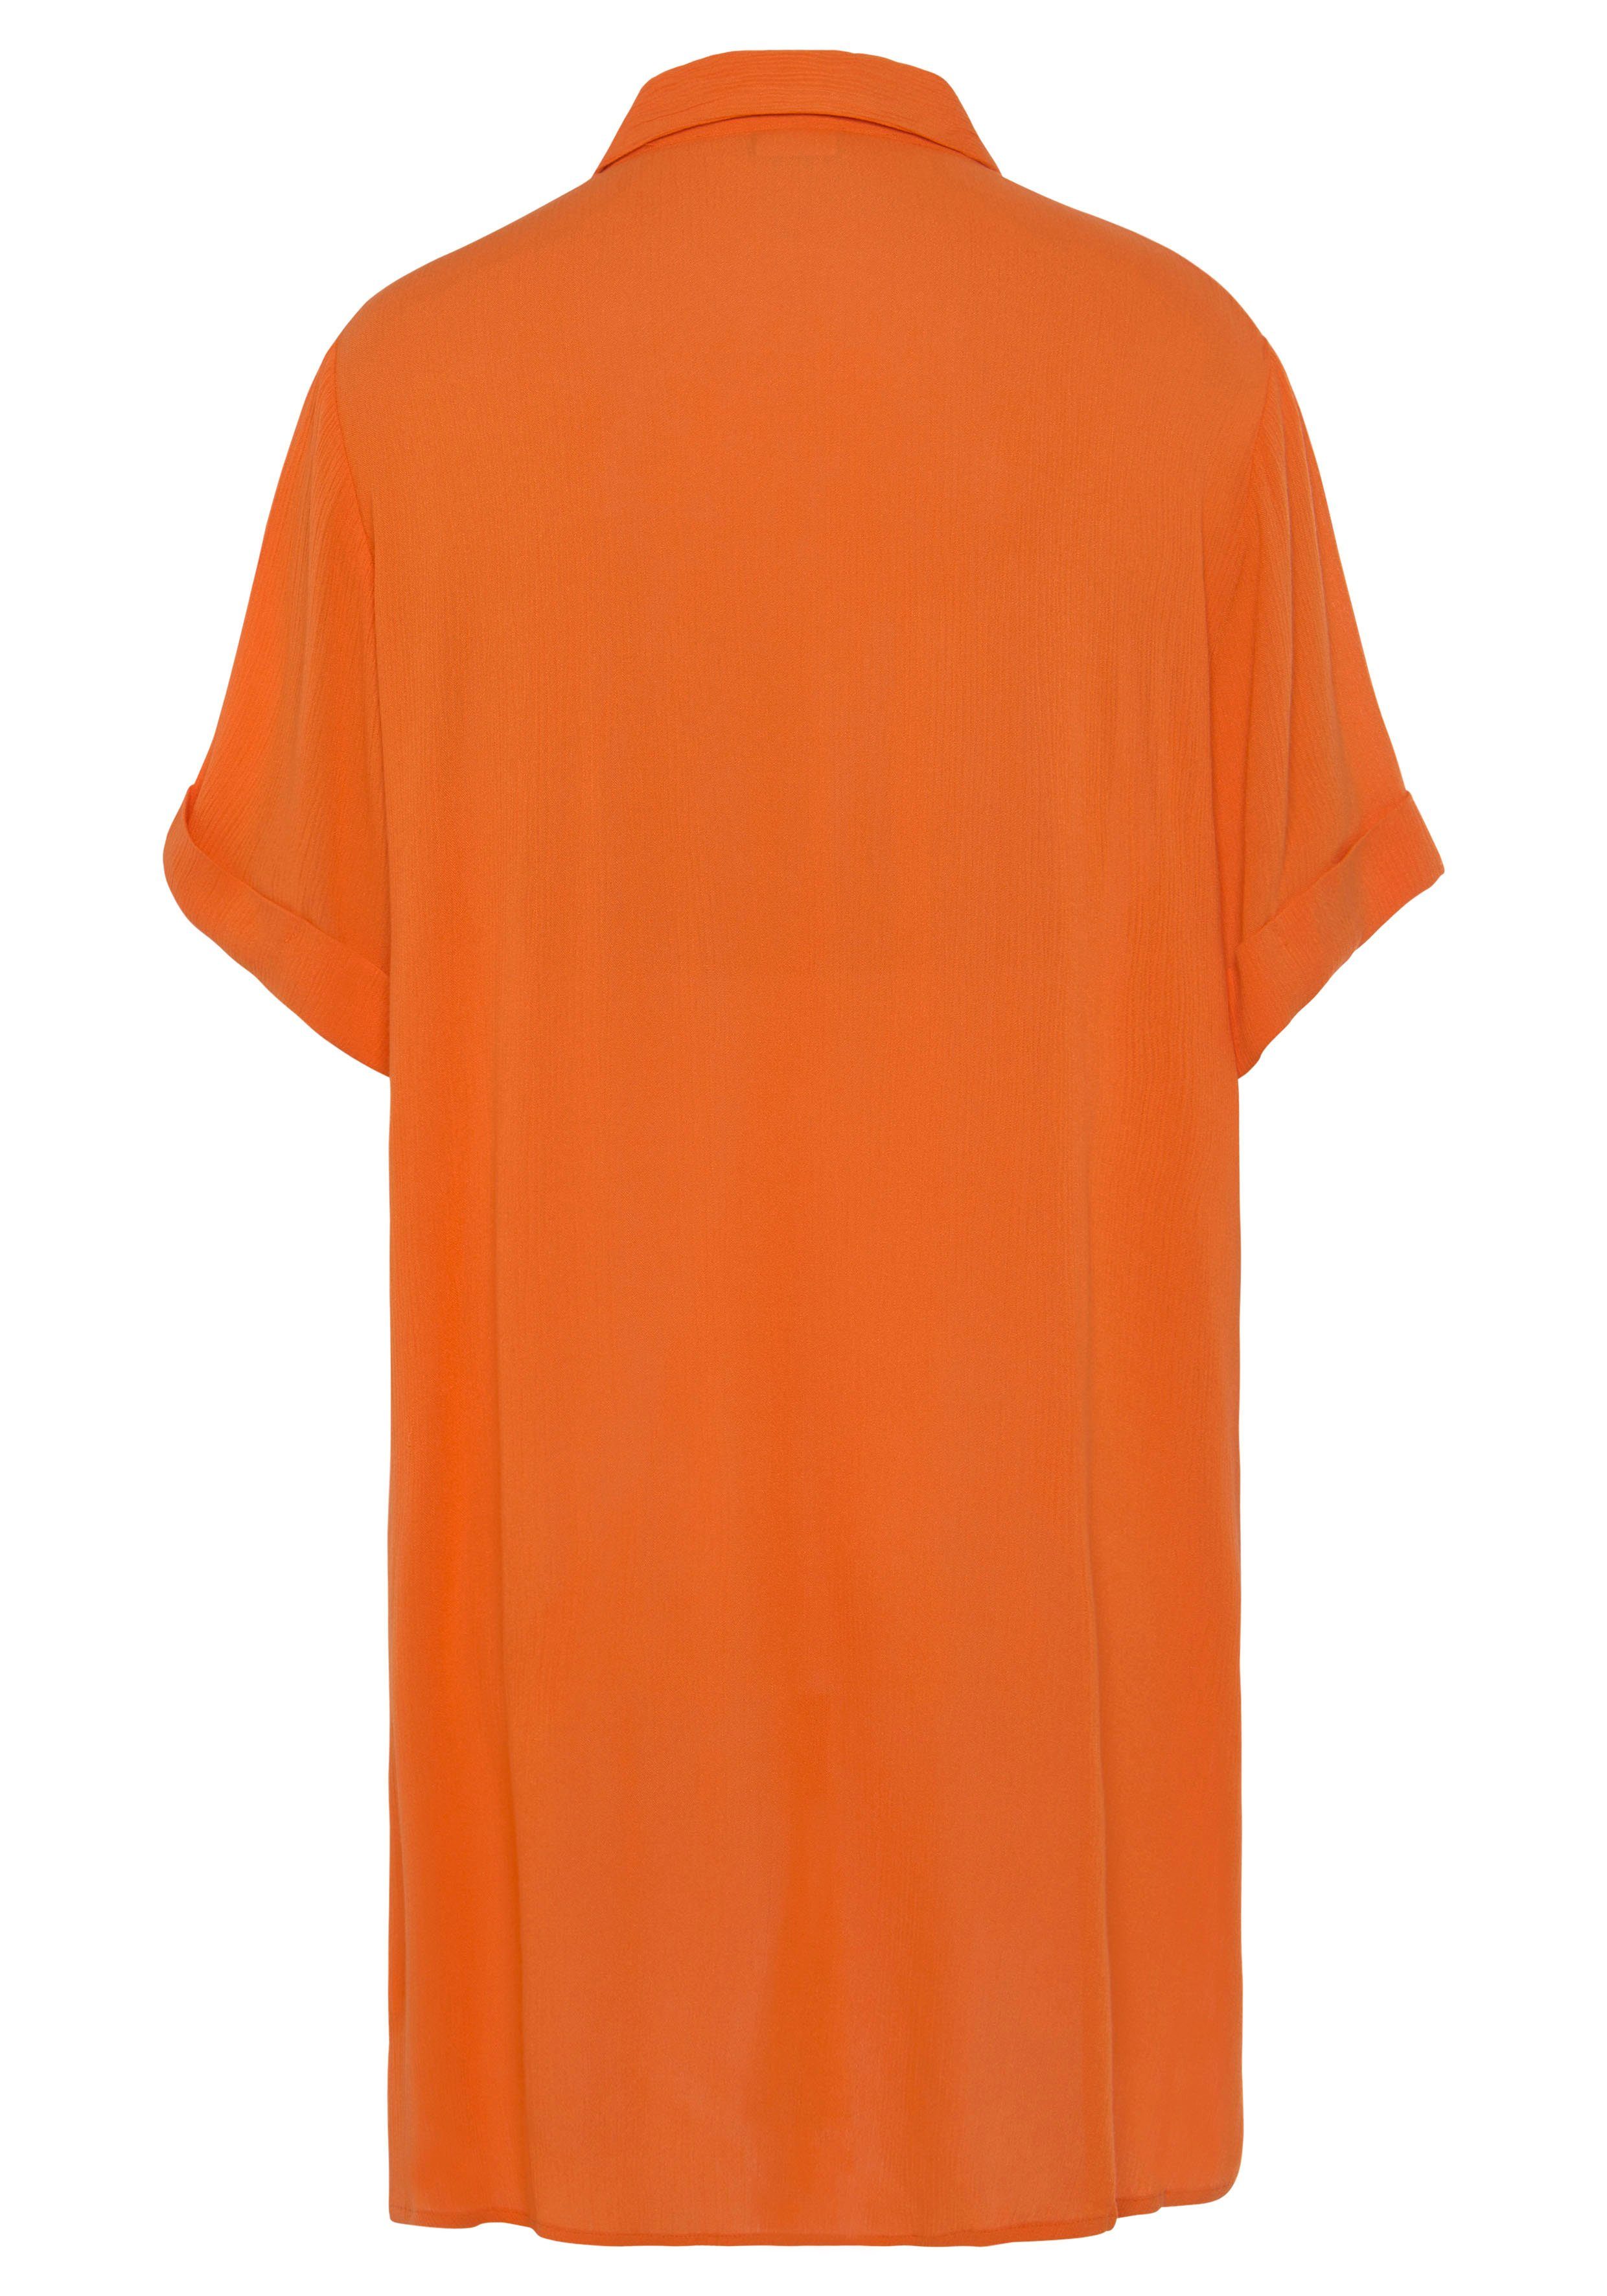 Blusenkleid, orange Longbluse sommerlich mit Knopfleiste, LASCANA Kurzarmbluse,